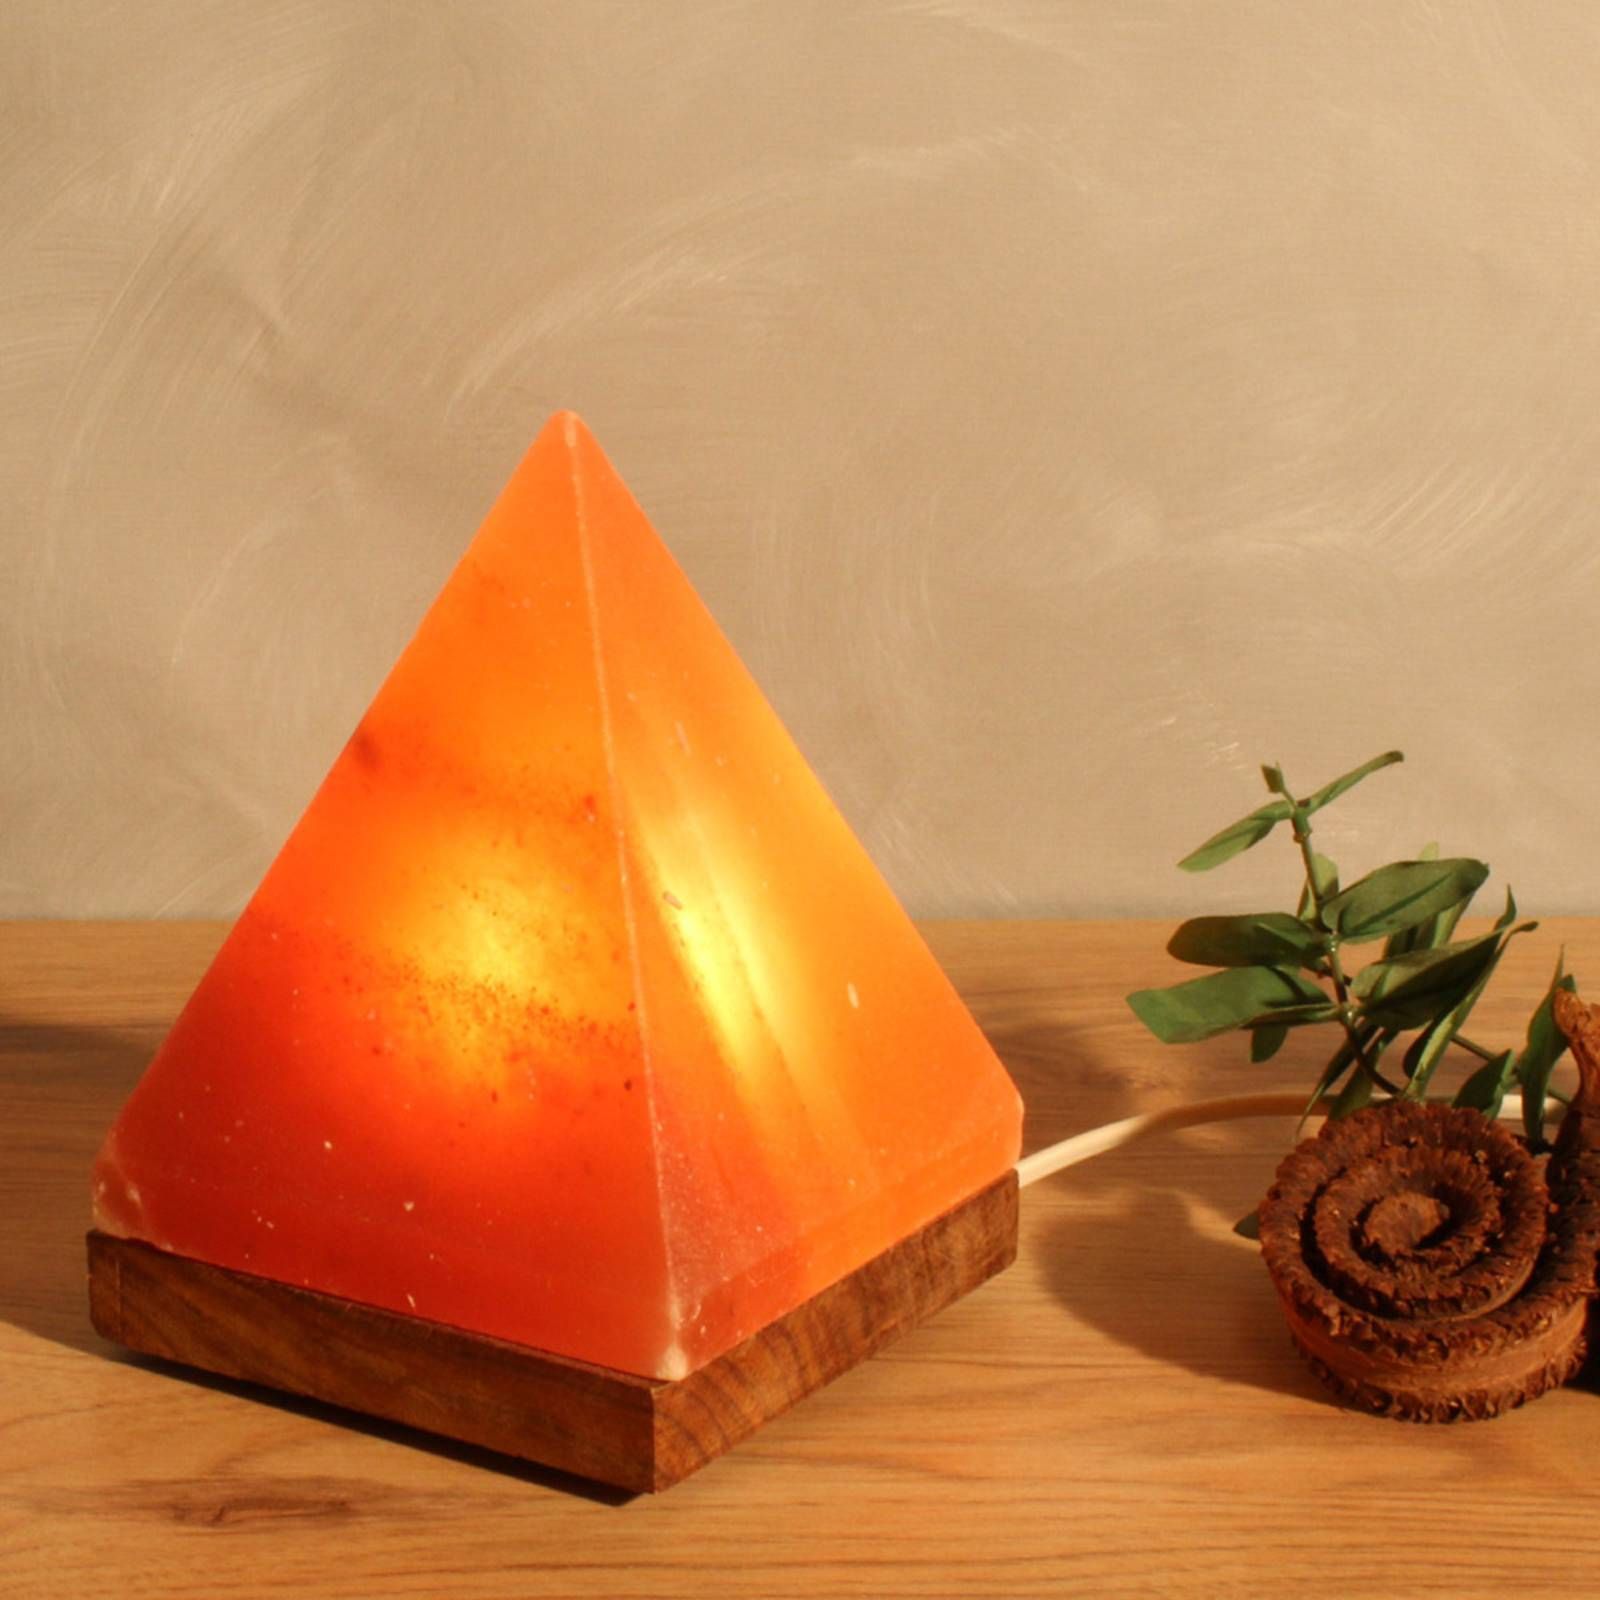 Wagner Life Soľná lampa Pyramída s podstavcom, jantárová, Obývacia izba / jedáleň, soľný krištáľ, drevo, E14, 15W, K: 17.5cm